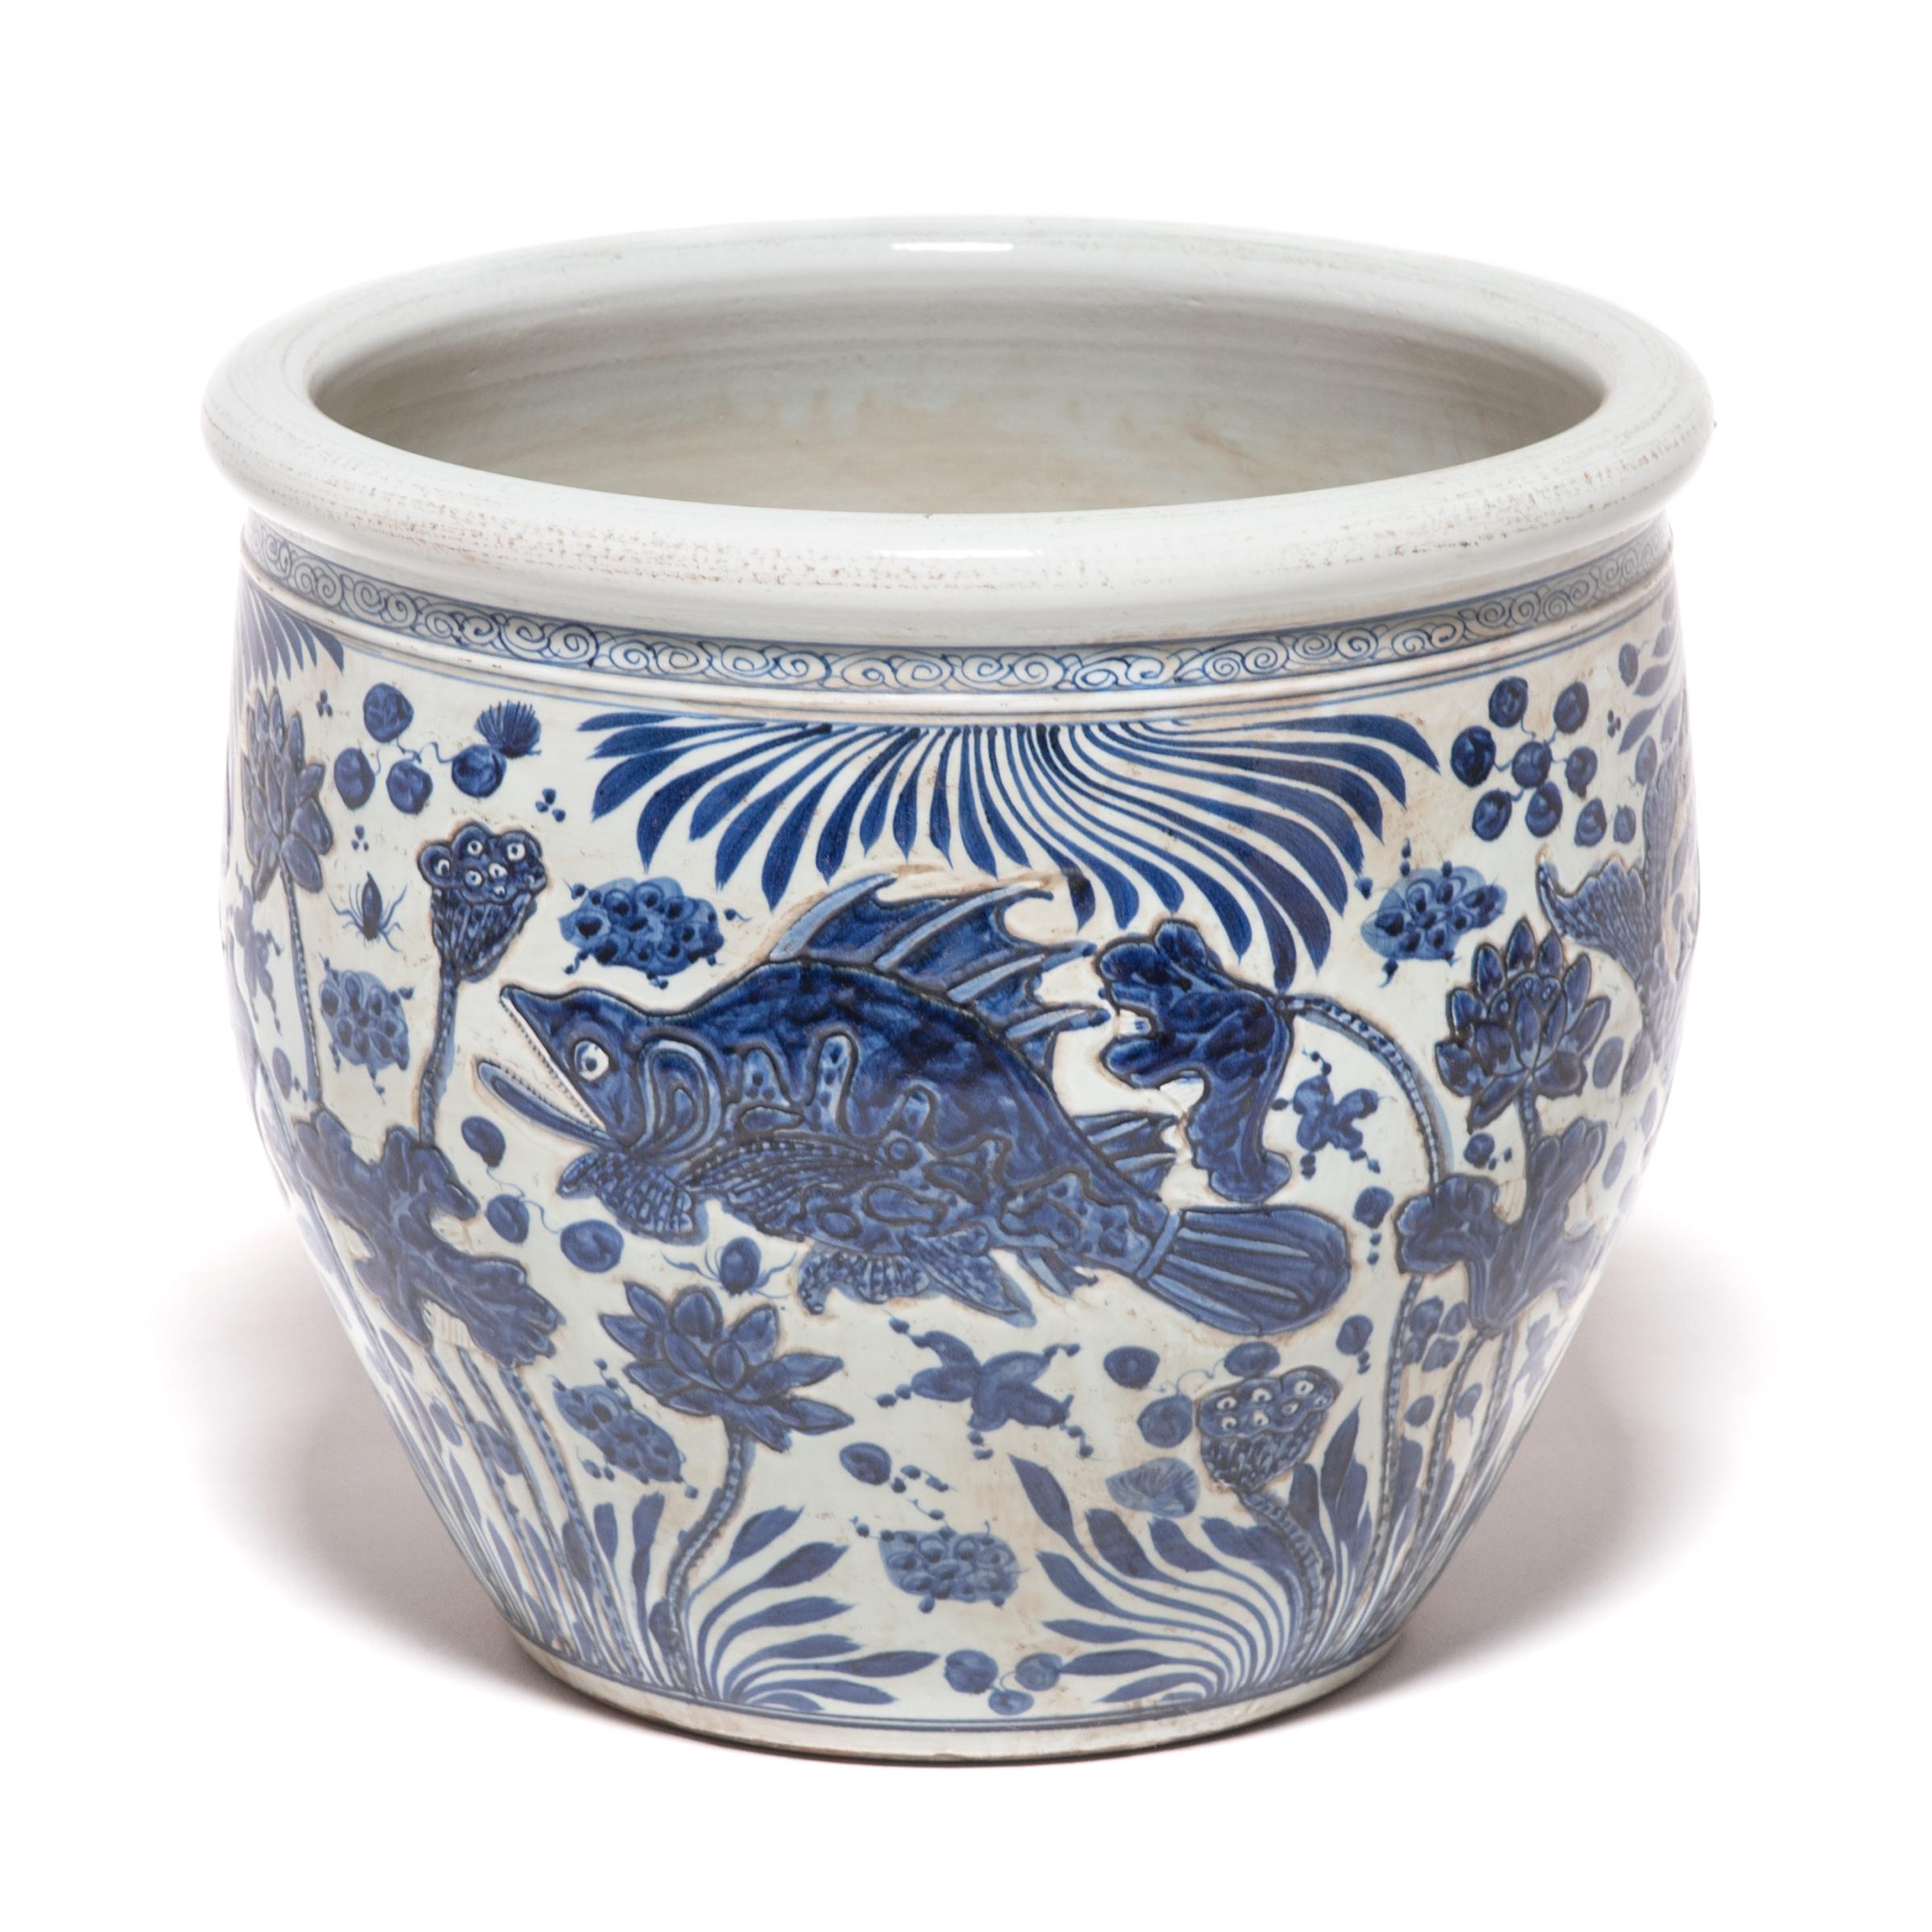 Glazed Chinese Blue and White Fish Bowl